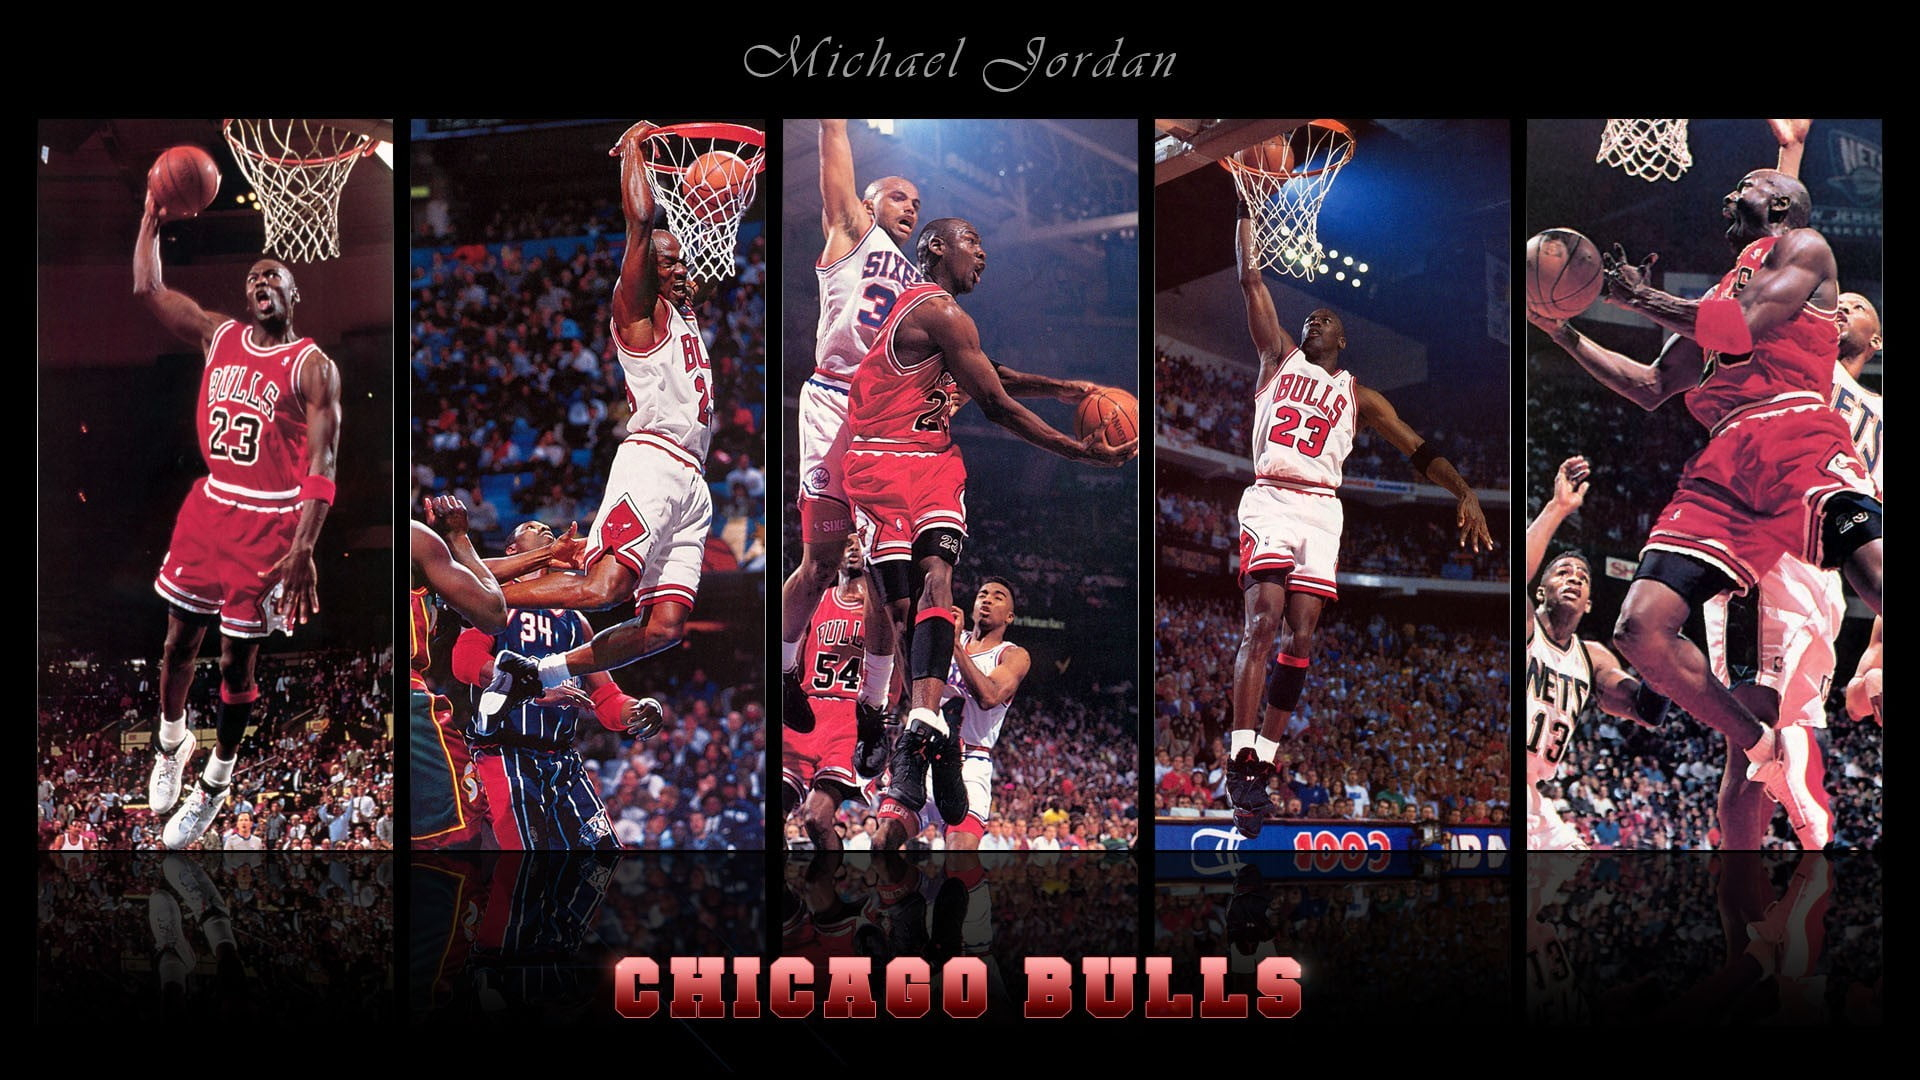 Chicago Bulls Michael Jordan wallpaper, basketball, Chciago Bulls, NBA